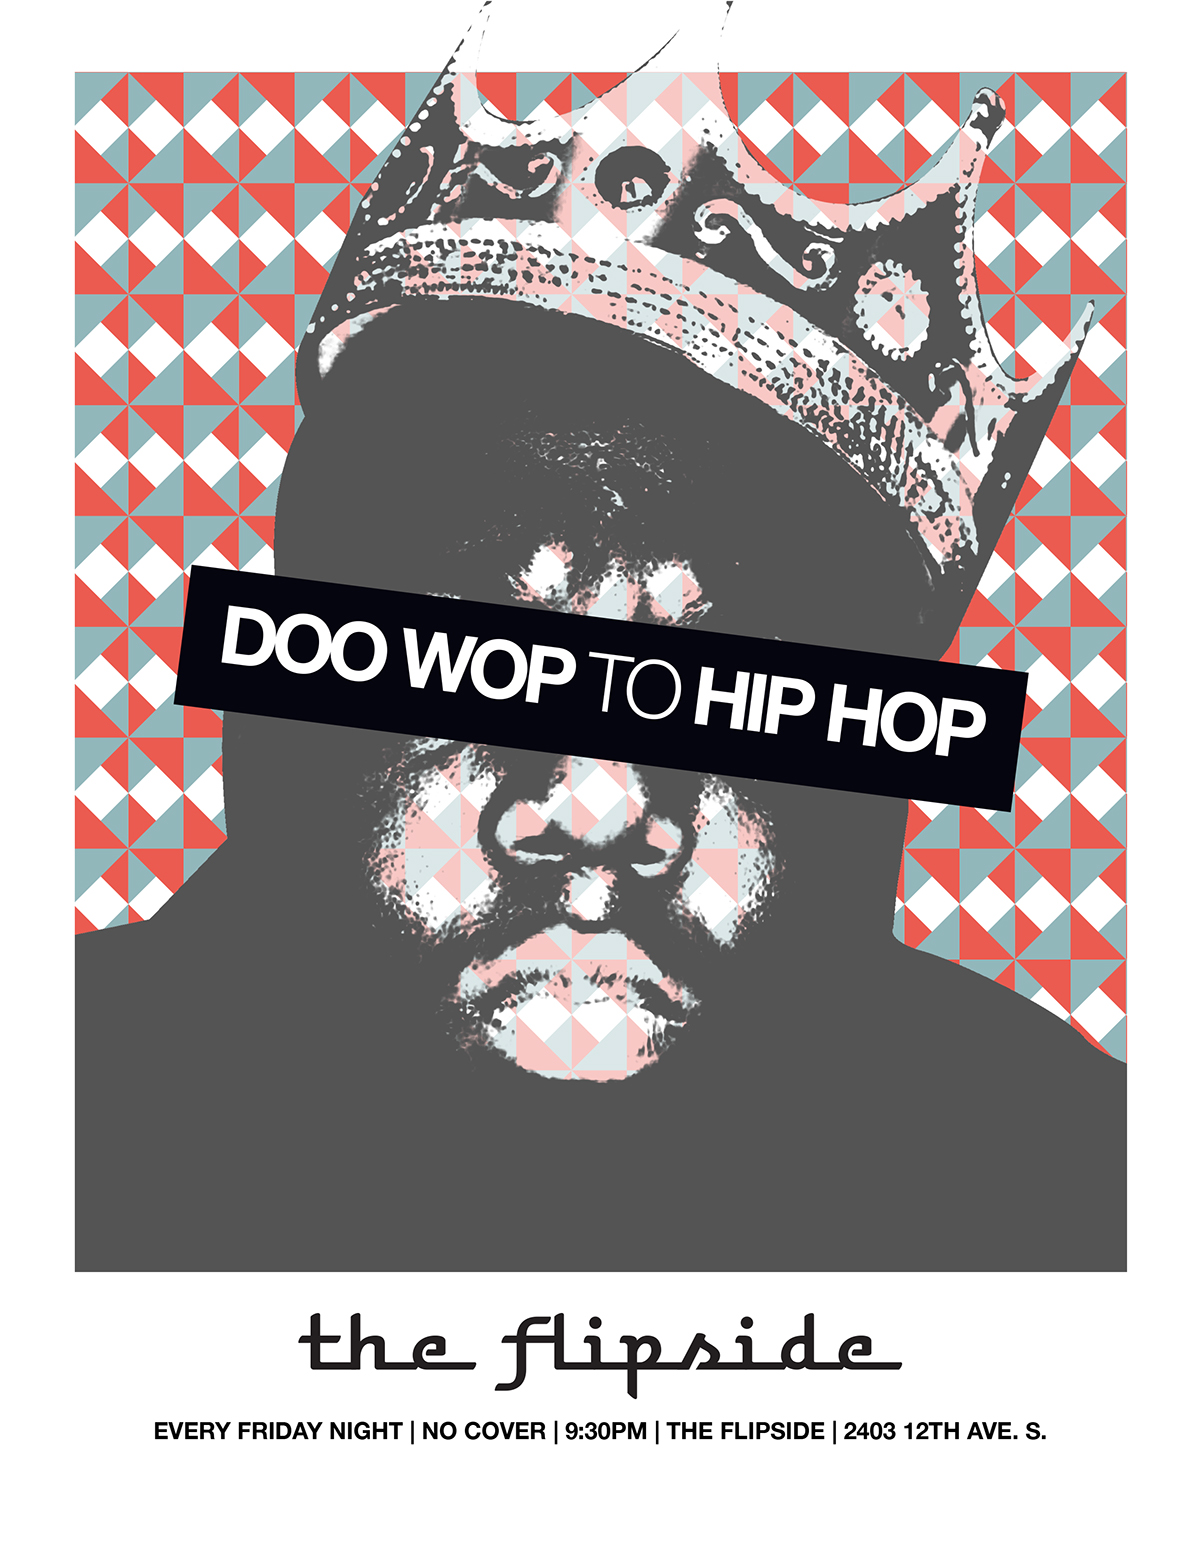 dance party promo Poster Design flyer Nasvhille notorious big david ruffin madonna elvis presley hip hop Rap Music pop music Soul Music